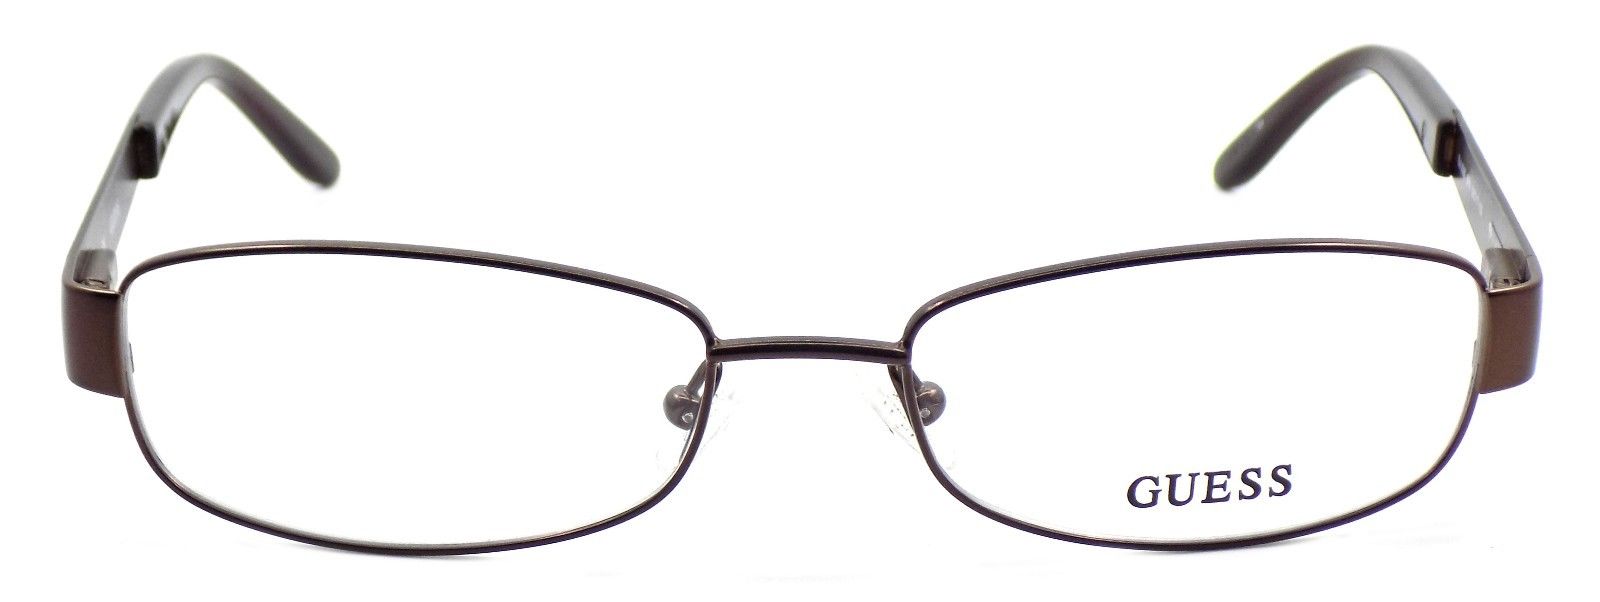 2-GUESS GU2392 BRN Women's Eyeglasses Frames 53-17-135 Brown + CASE-715583785281-IKSpecs